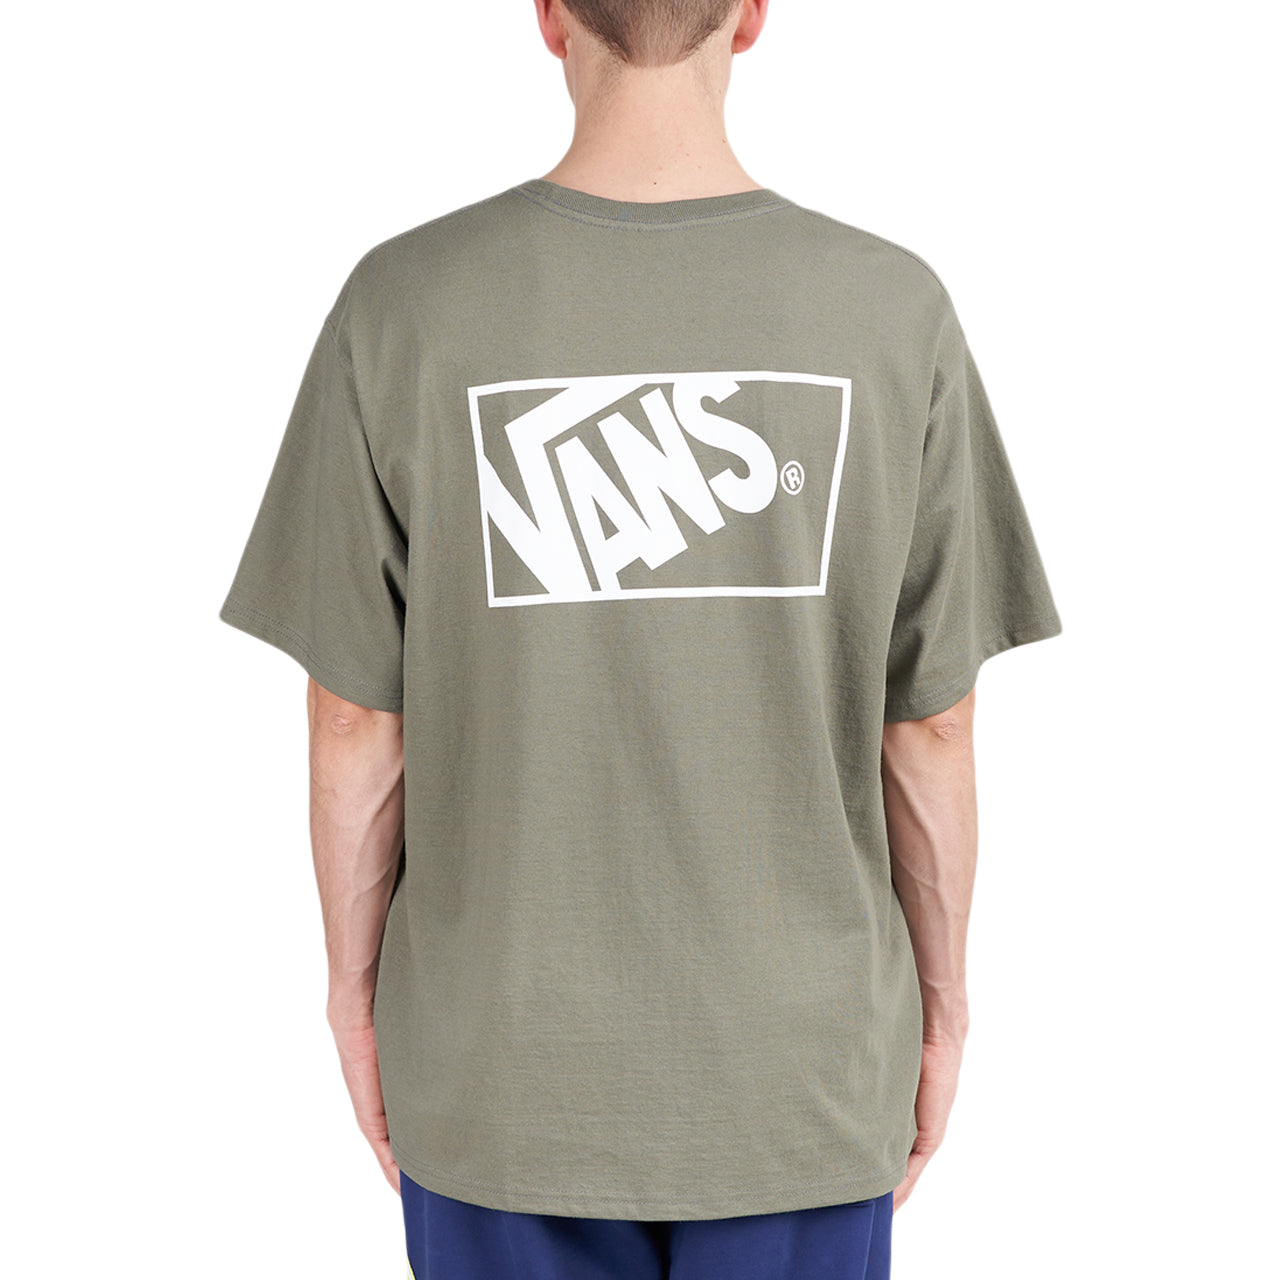 Vans Vault x WTAPS Pocket T-Shirt (Oliv)  - Allike Store